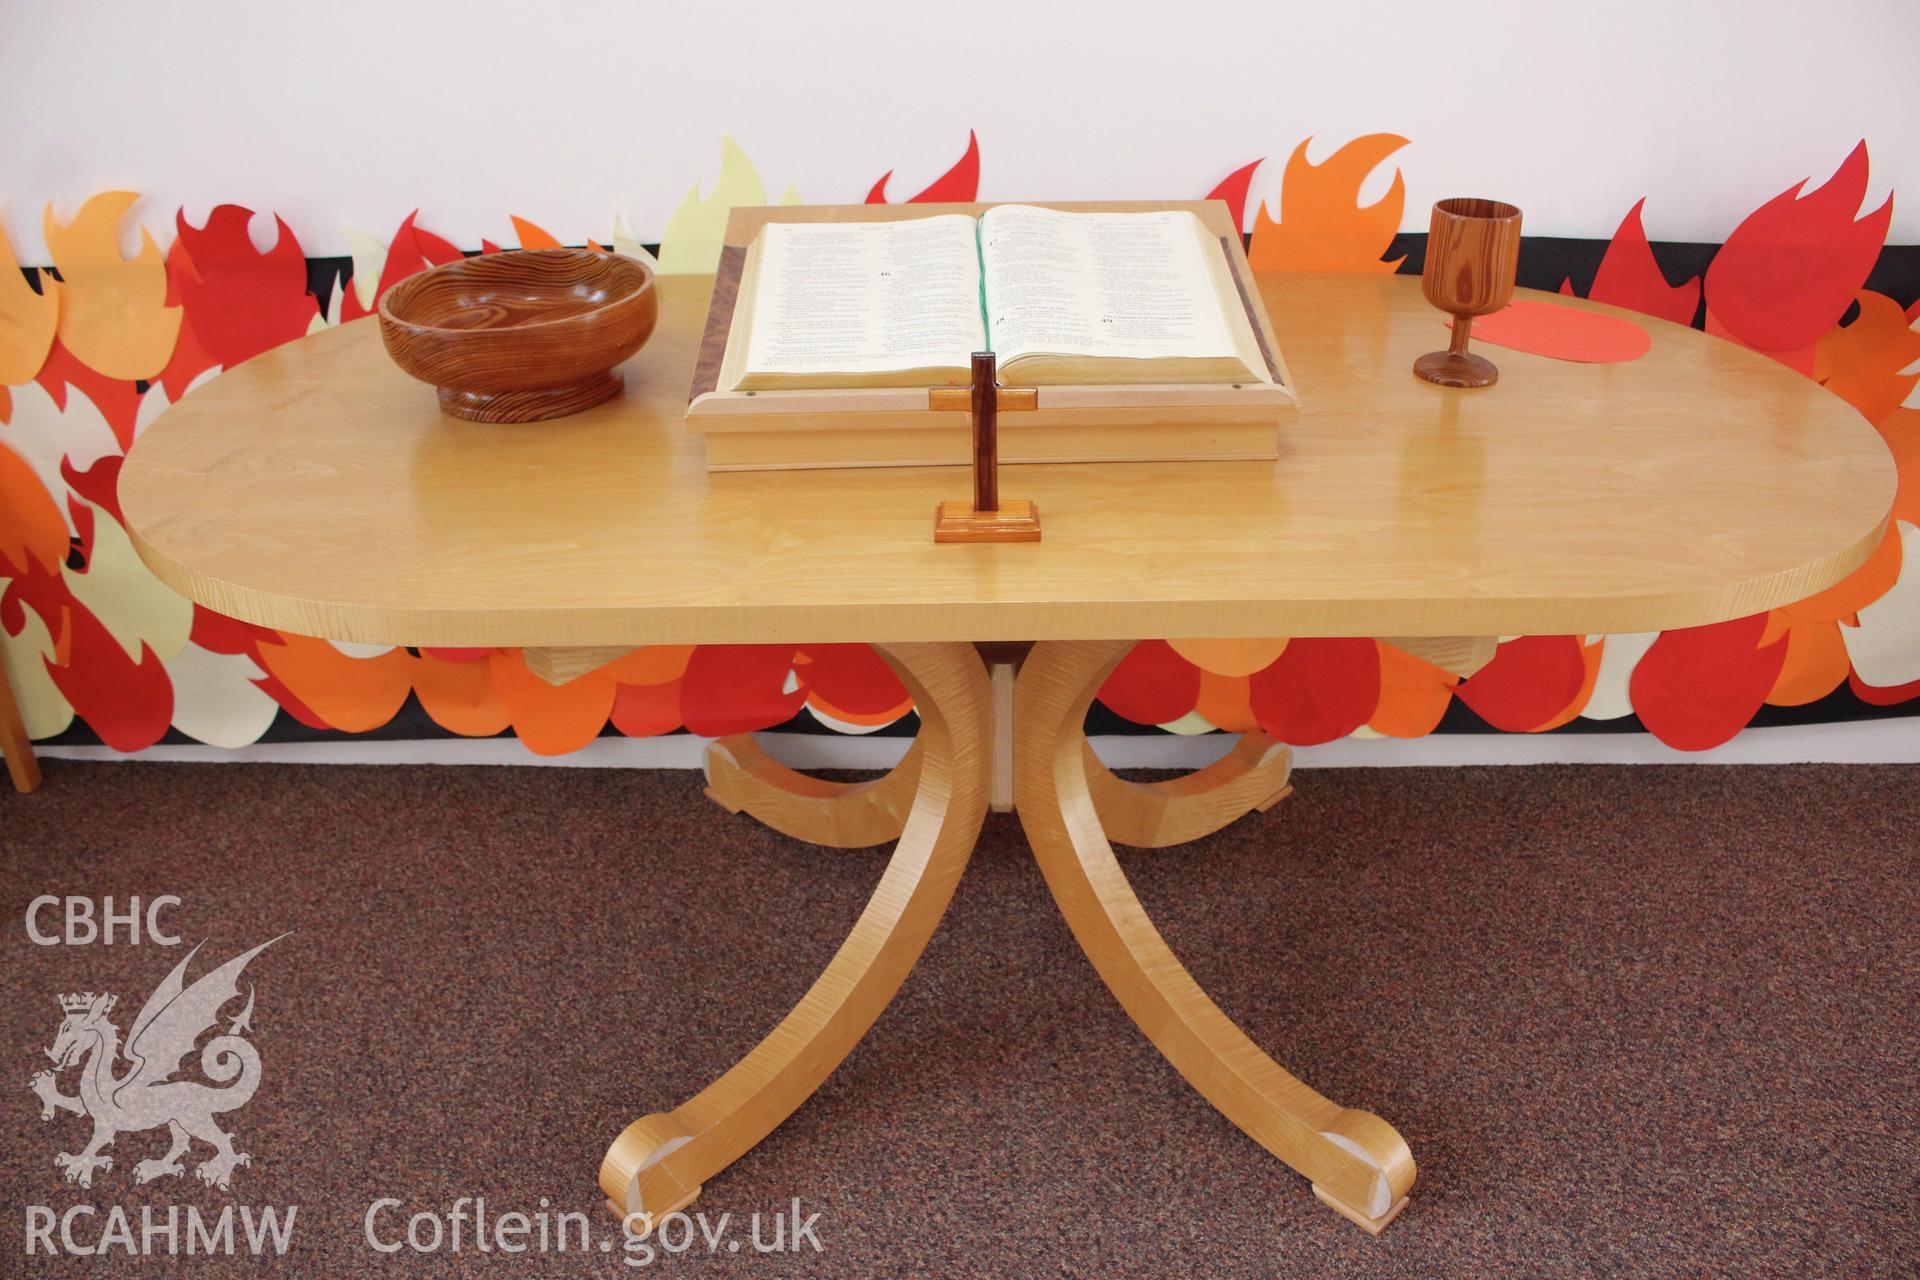 Manselton URC Chapel, Swansea, detail of communion table